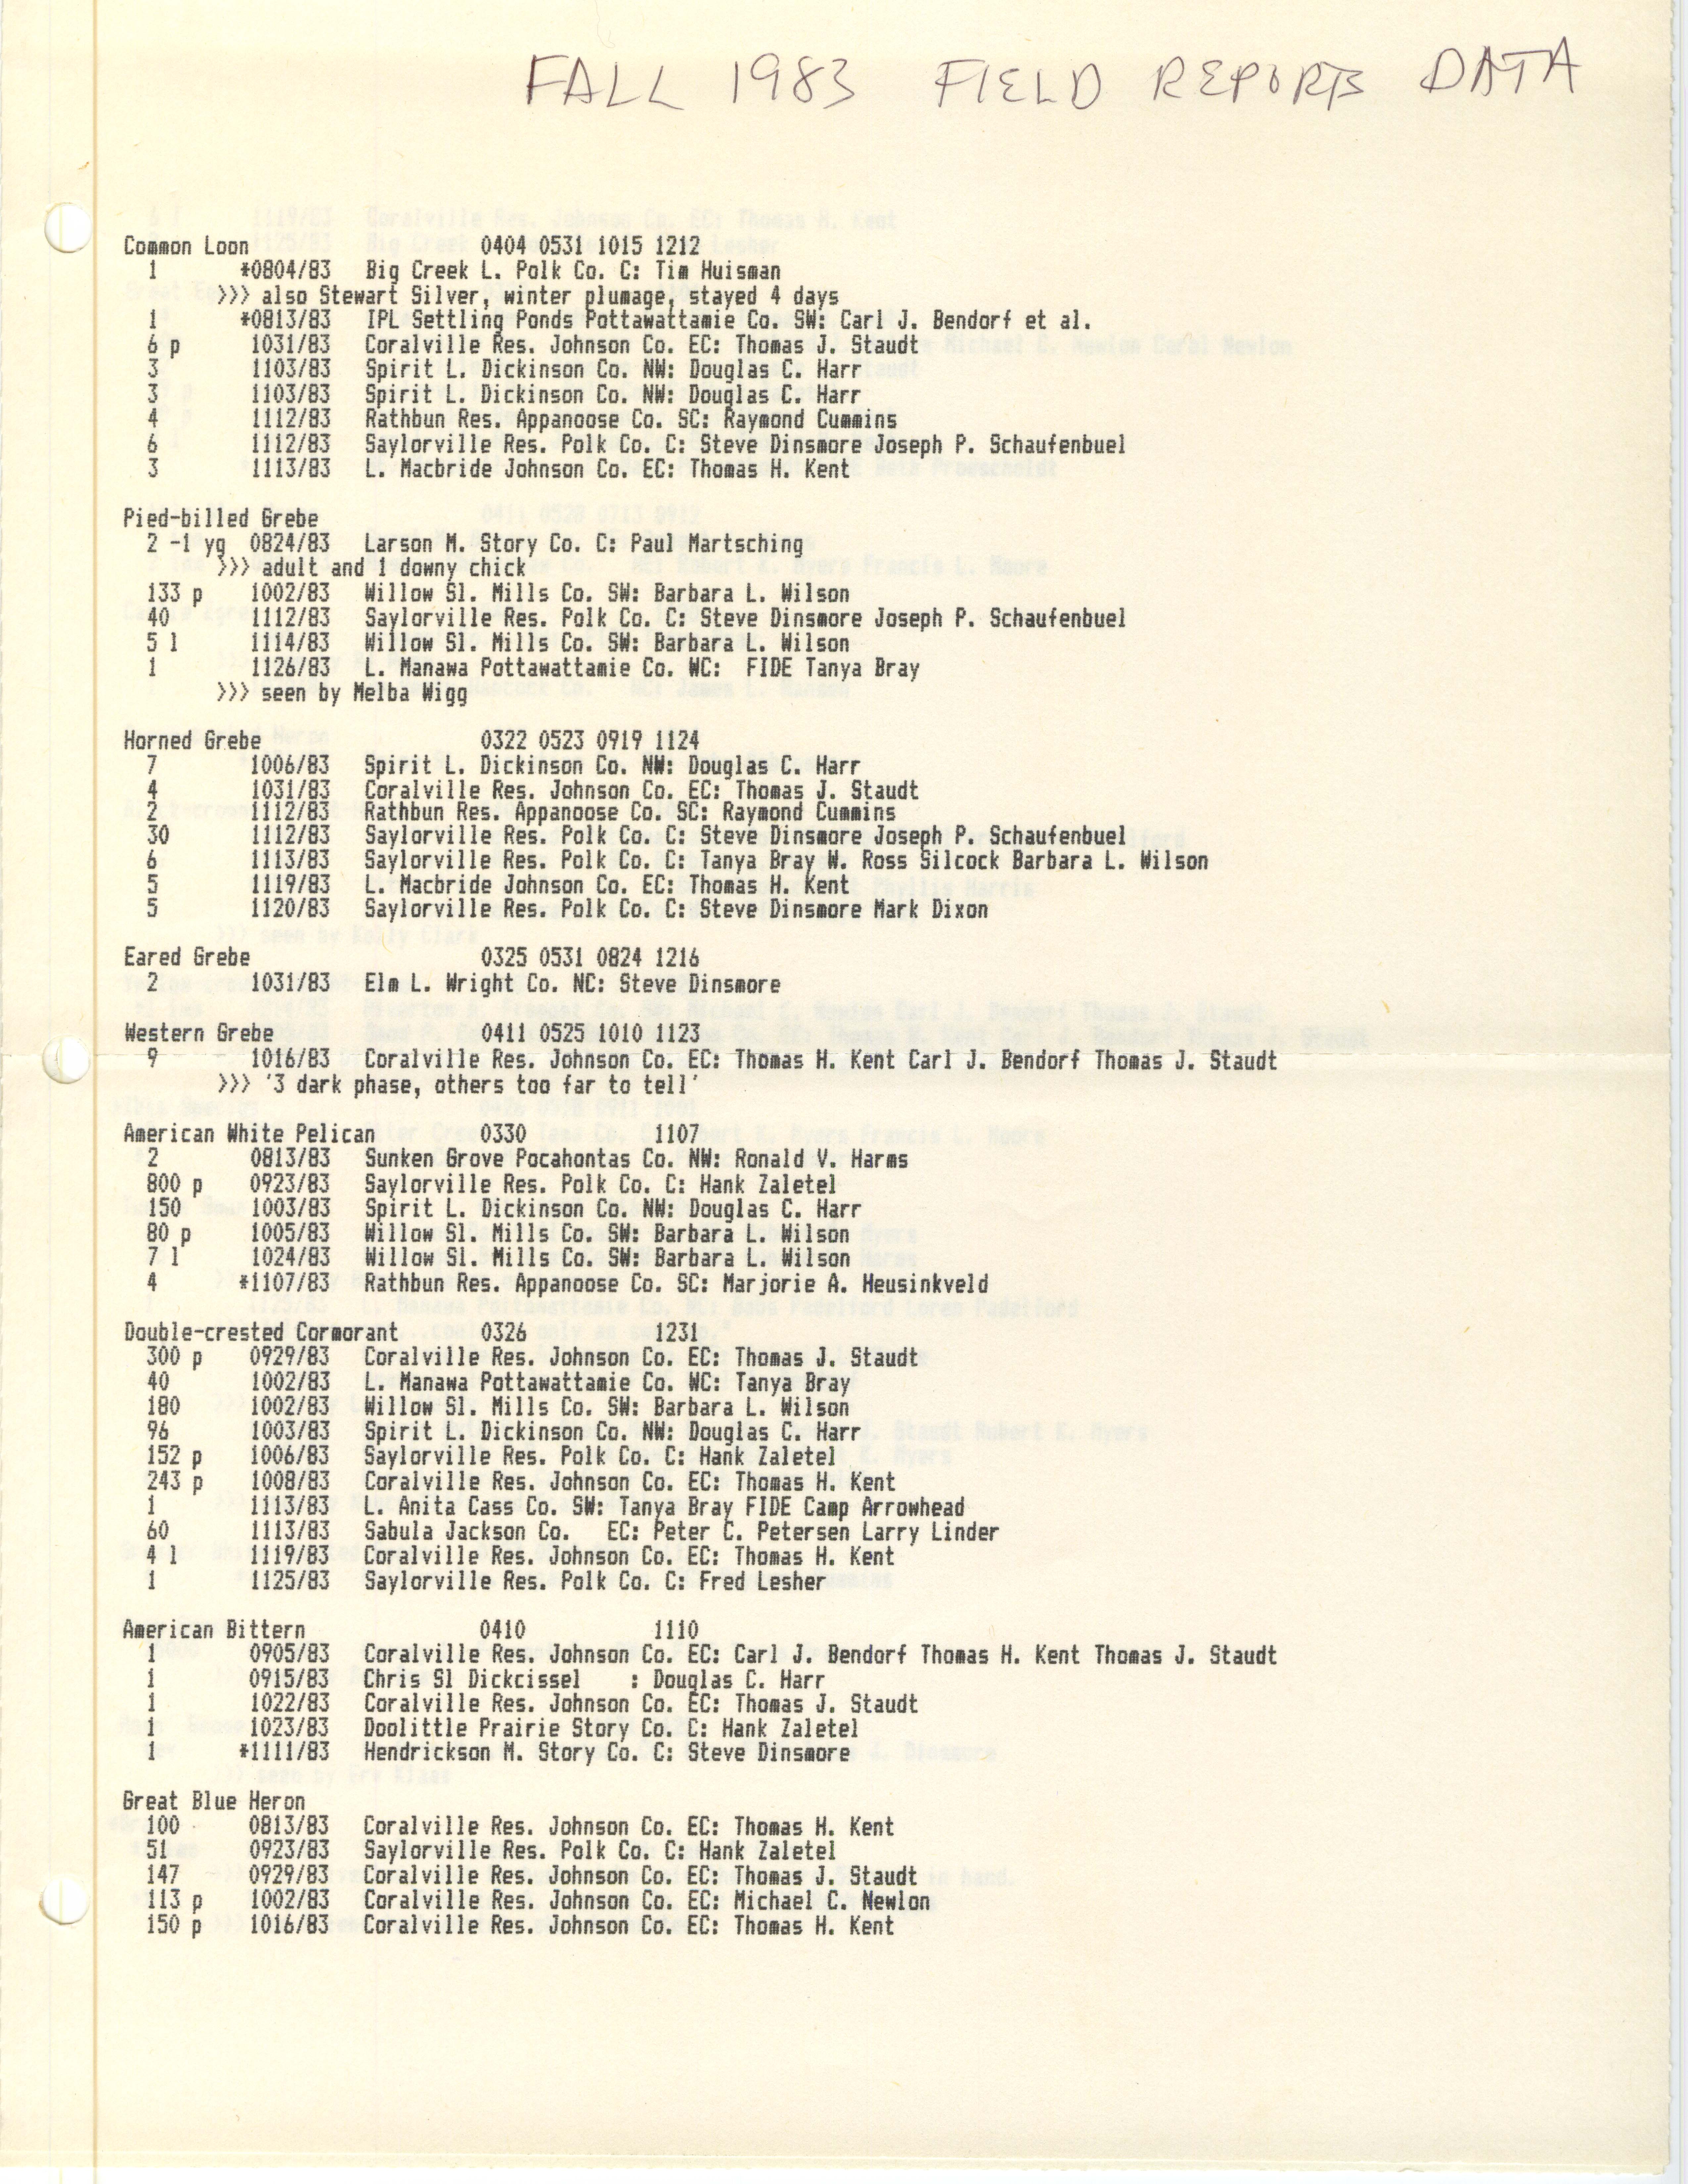 Fall 1983 field reports data